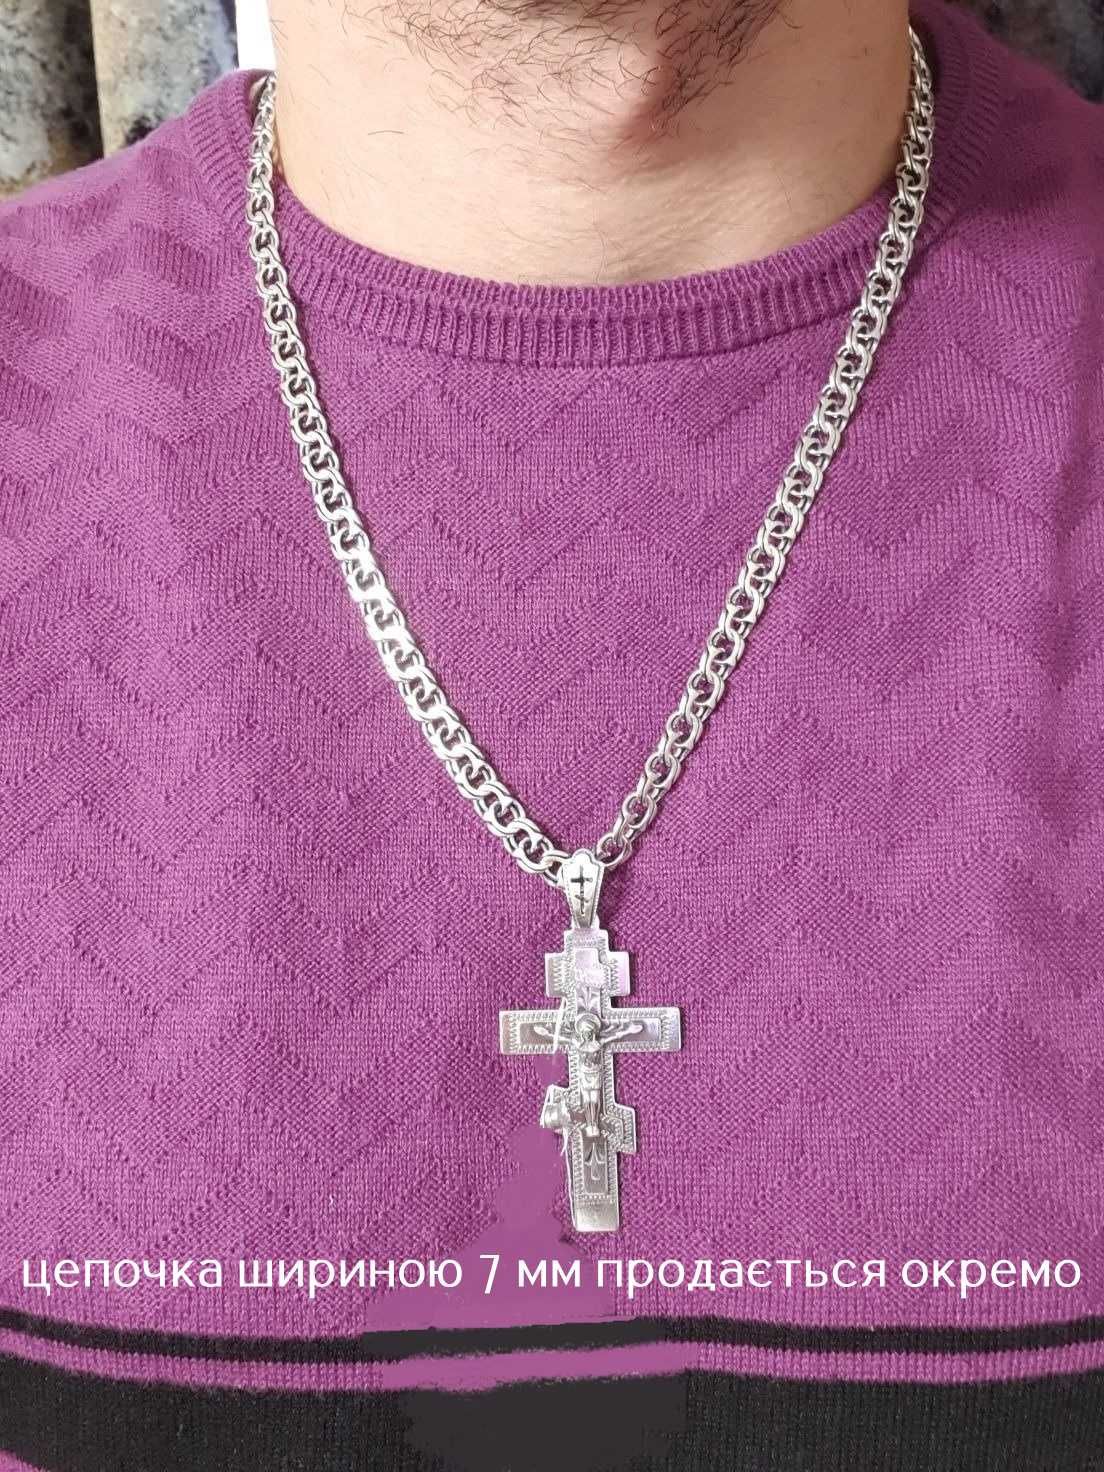 Крупный серебряный кулон крест 925 срібний хрест великий